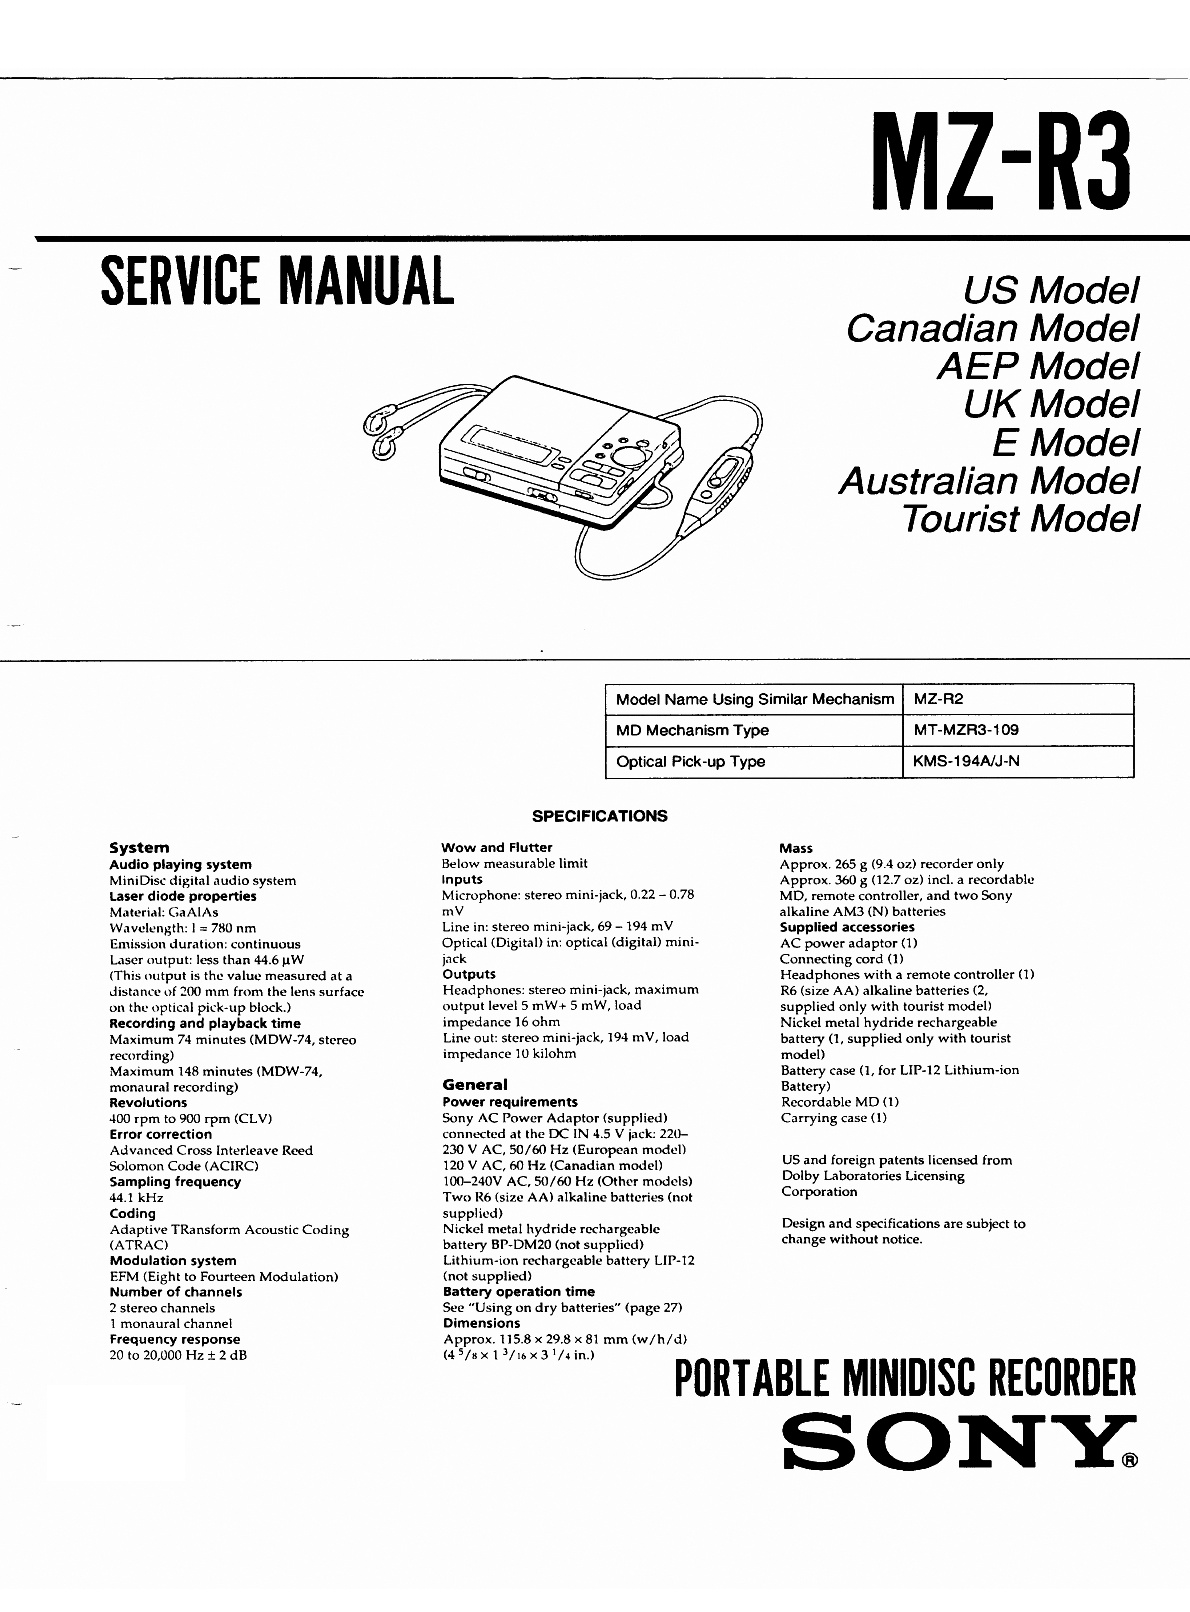 Sony MZ-R 3 Manual.jpg